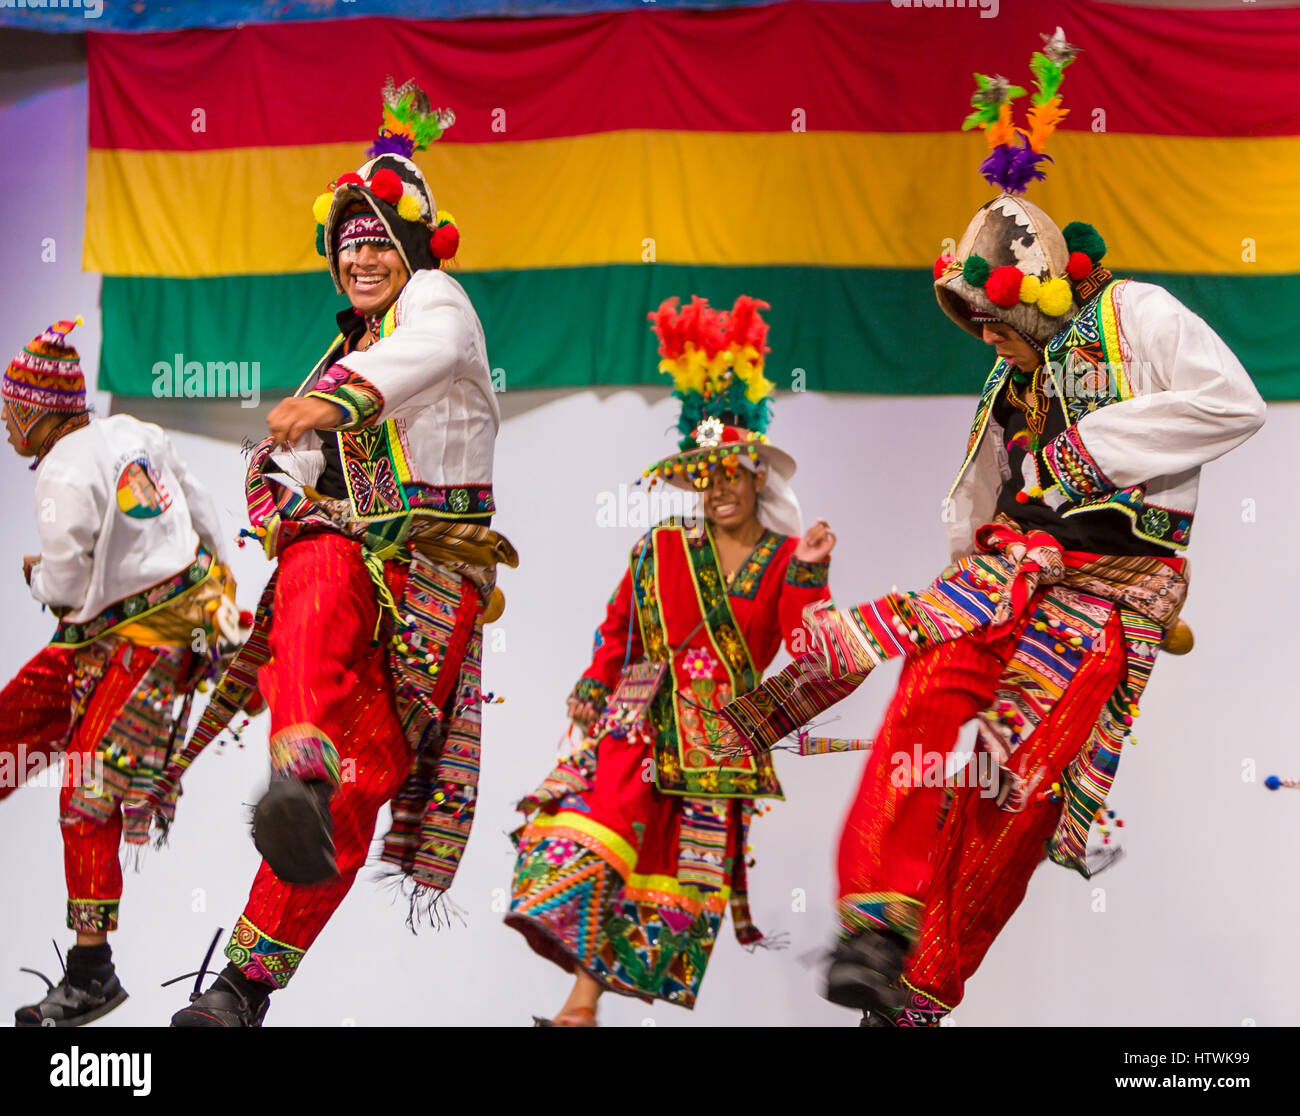 ARLINGTON, VIRGINIA, USA - Bolivian folk dancing group performs the Tinku dance during competition. Arlington has a large Bolivia immigrant community. Stock Photo